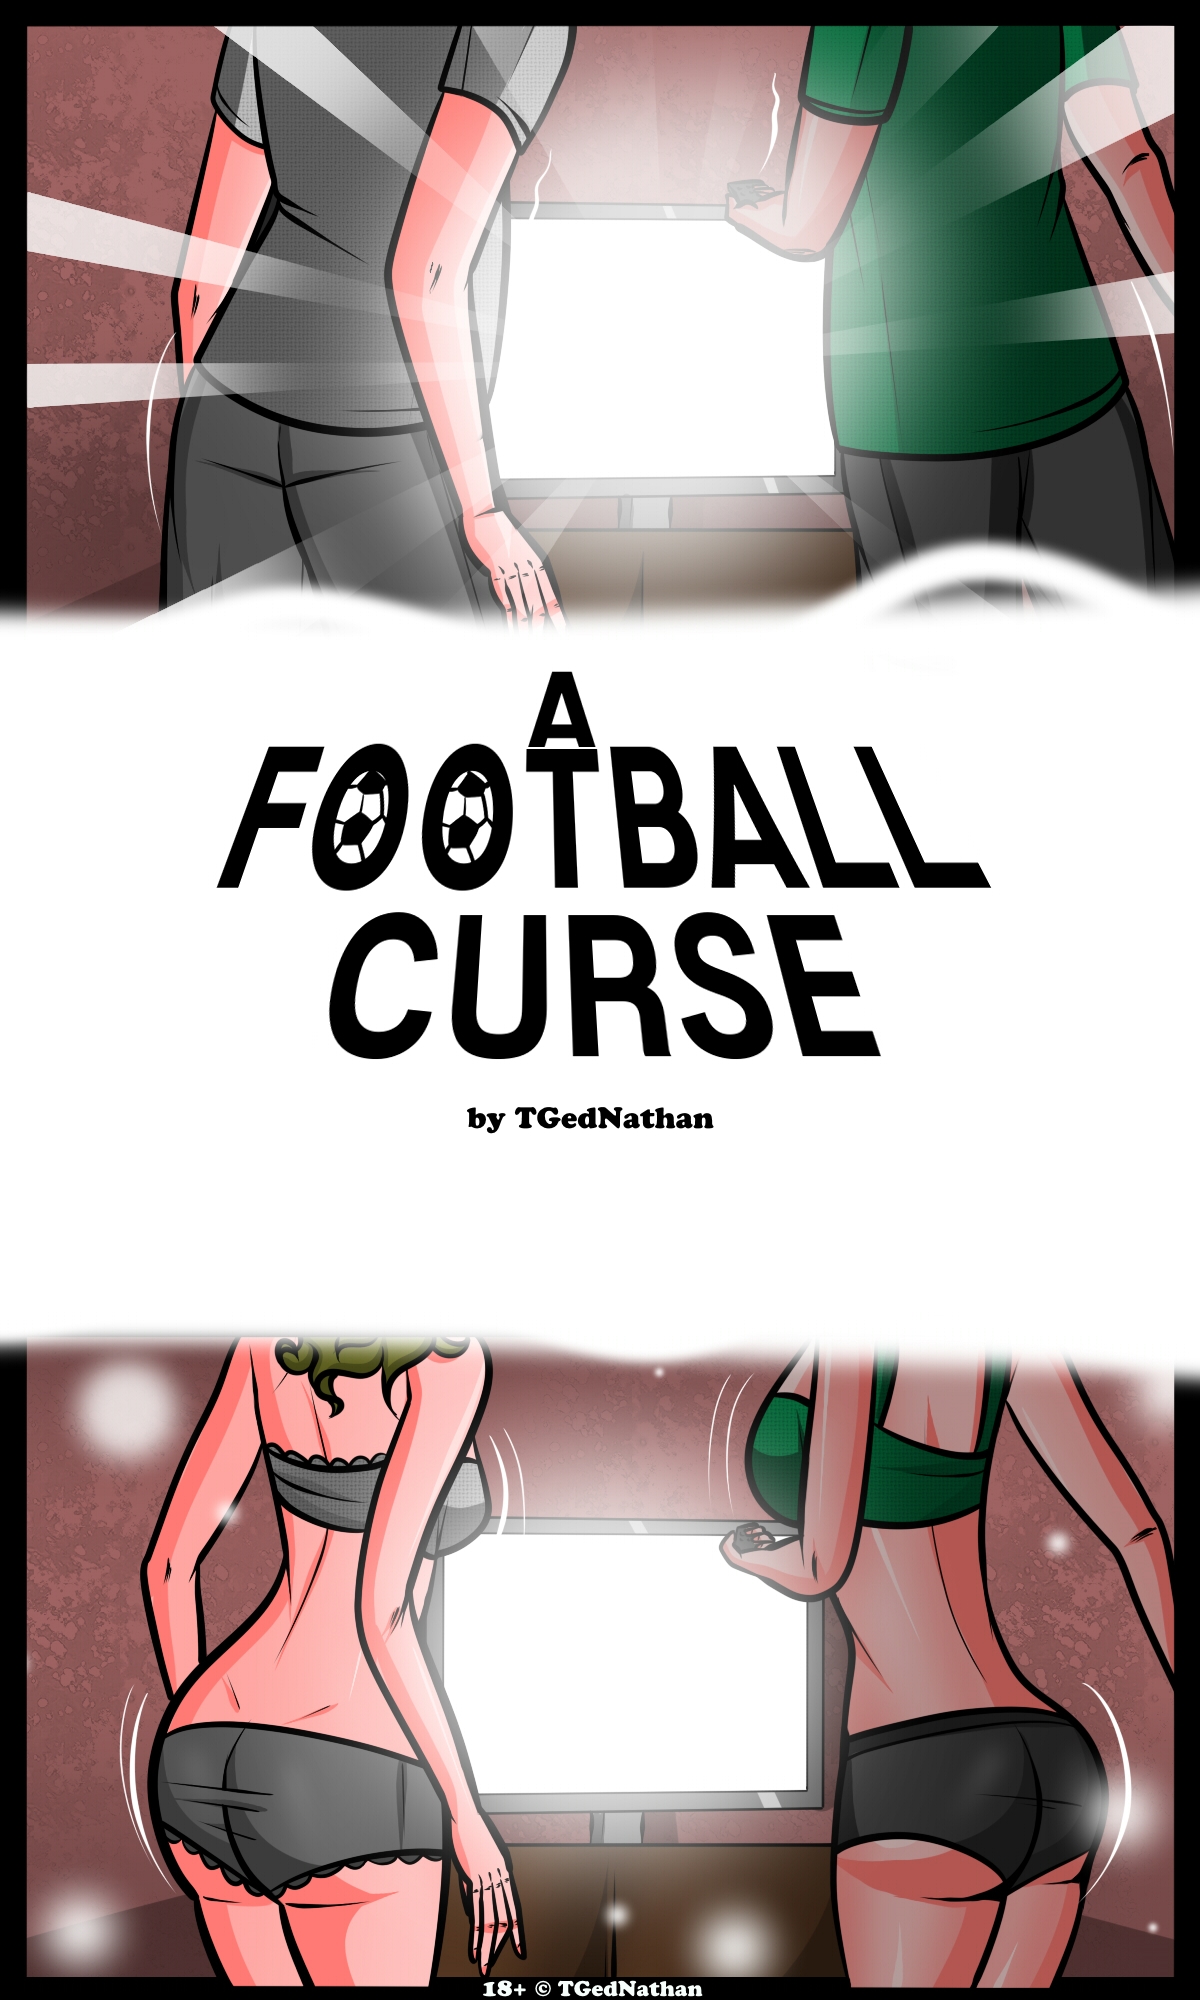 Tgednathan - The Football Curse porn comic.